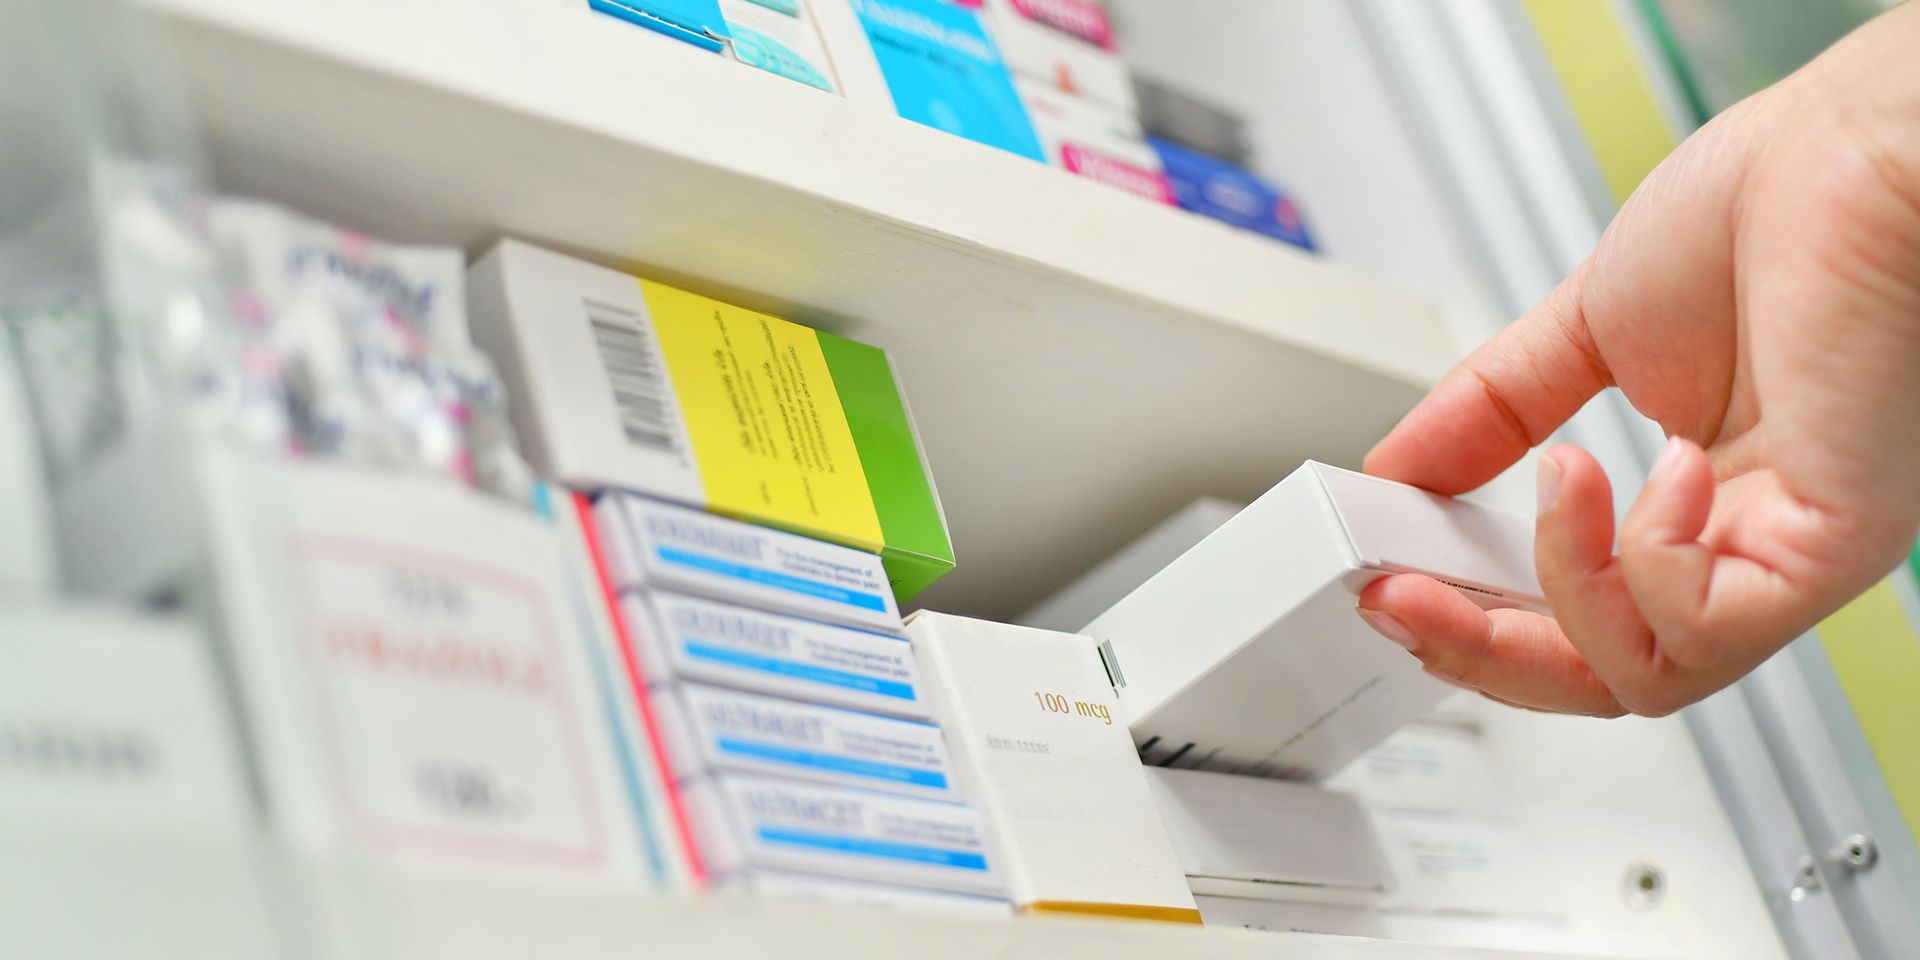 Pharmacist using dispensing labels